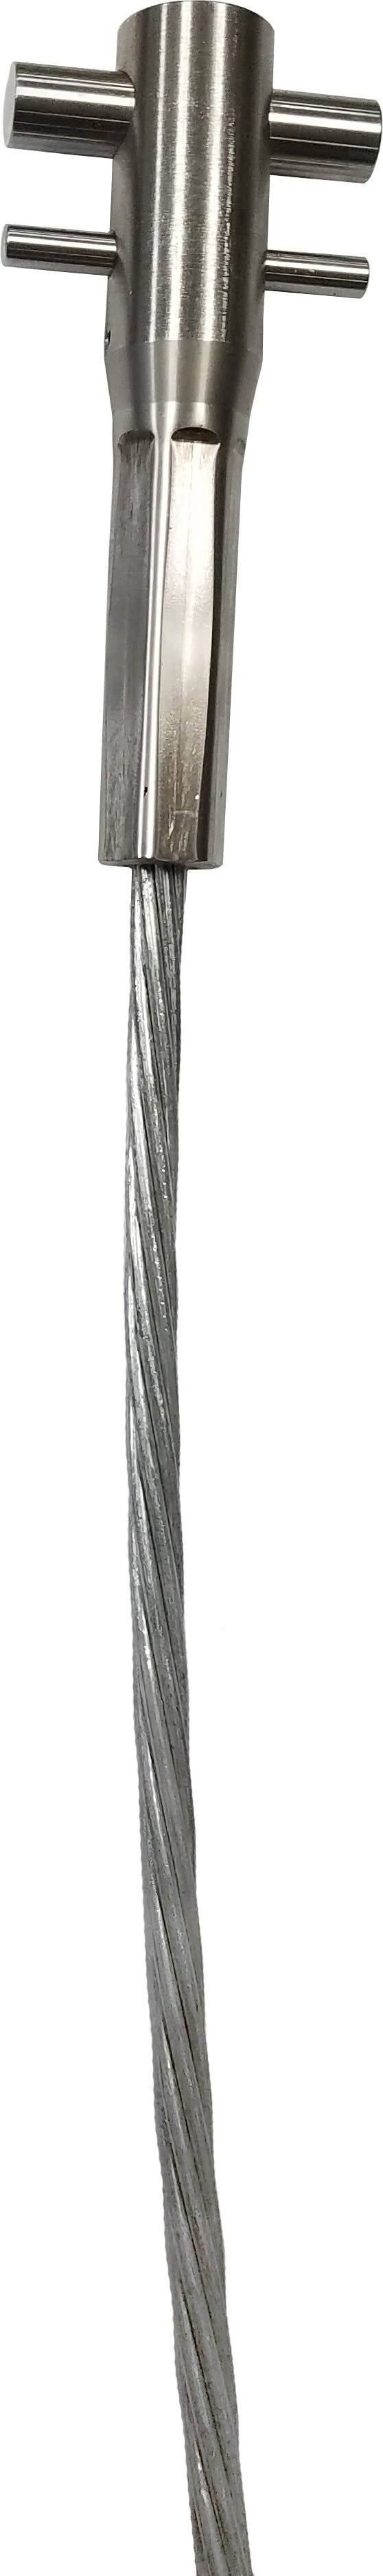 3M™ DBI-SALA® Lad-Saf™ Swaged Cable 6115010, 3/8 Inch, Galvanized Steel, 60 m